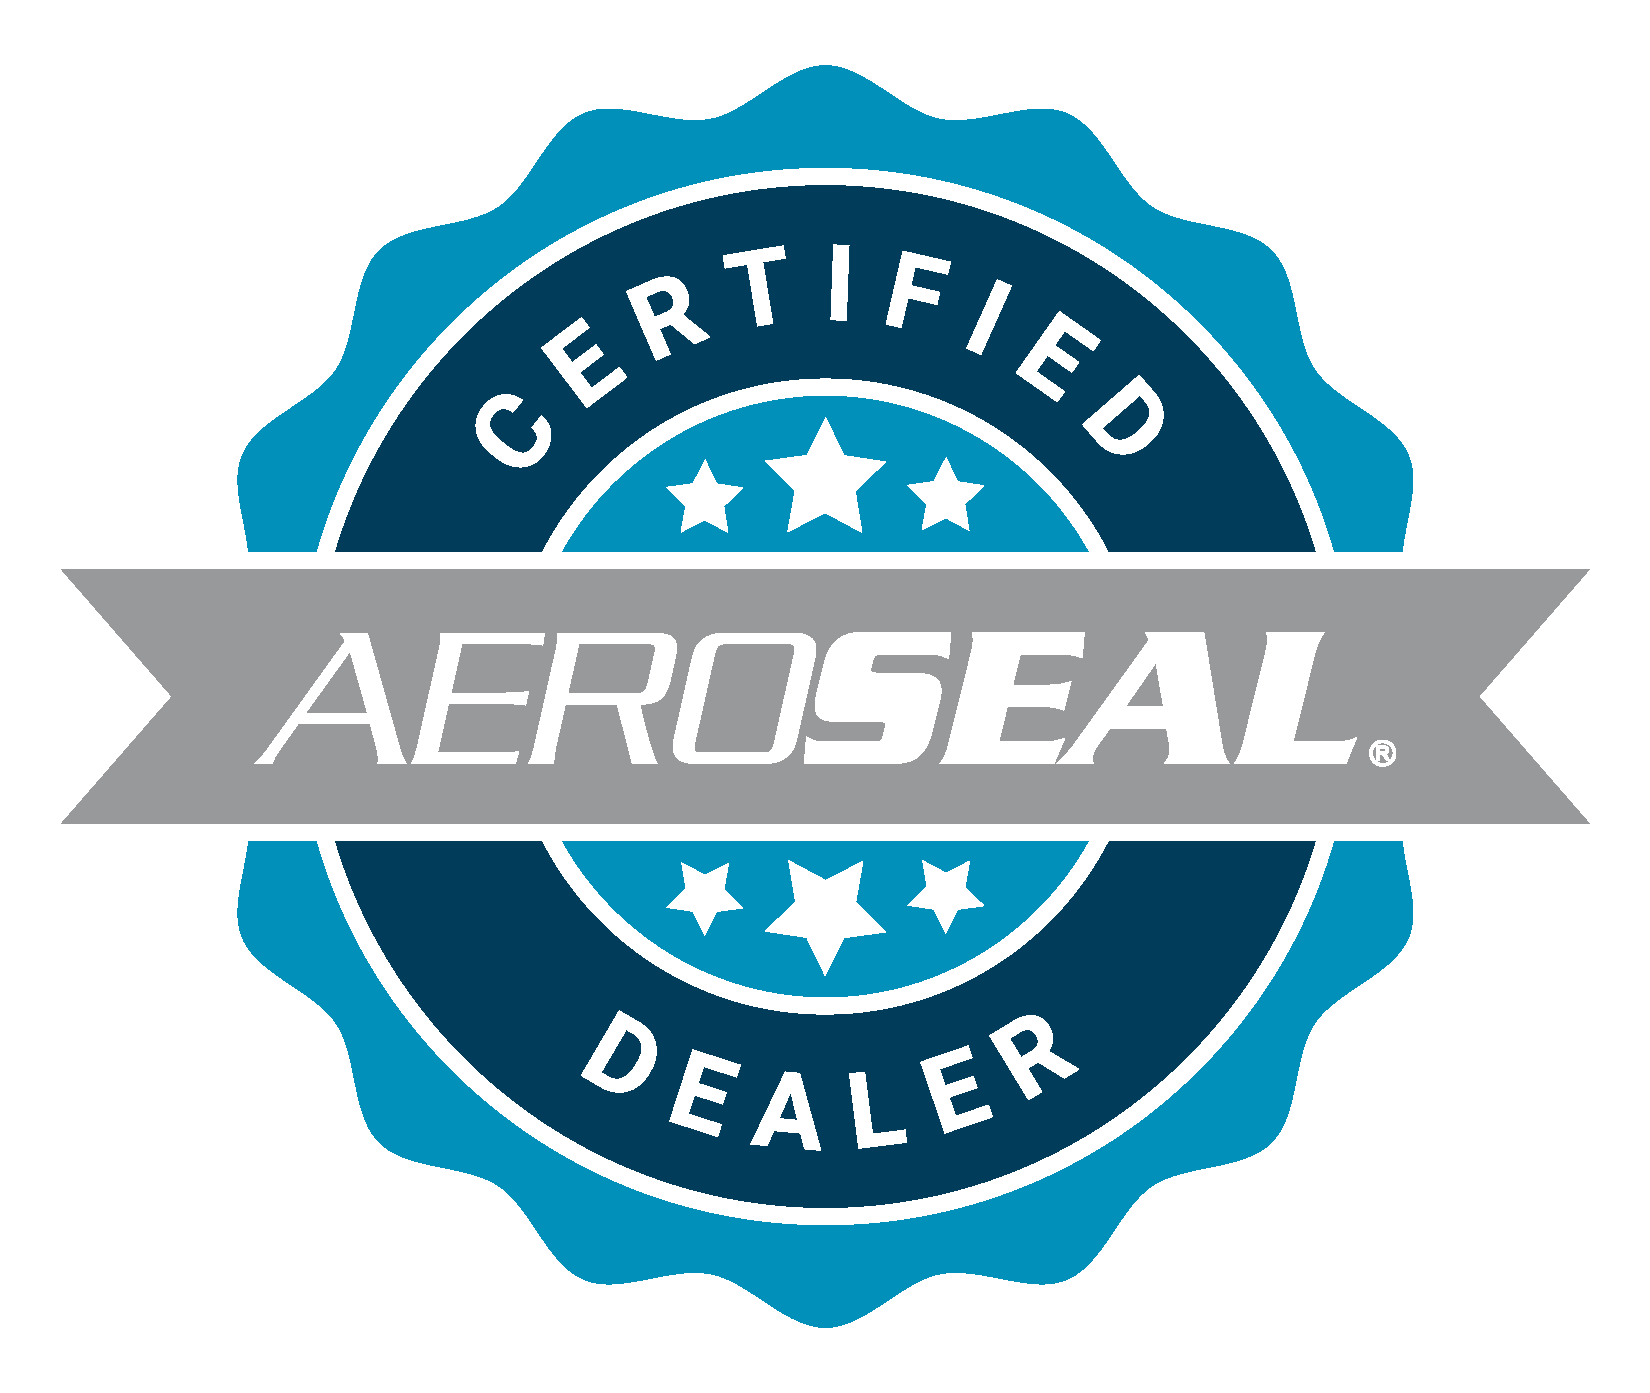 certified aeroseal dealer seal